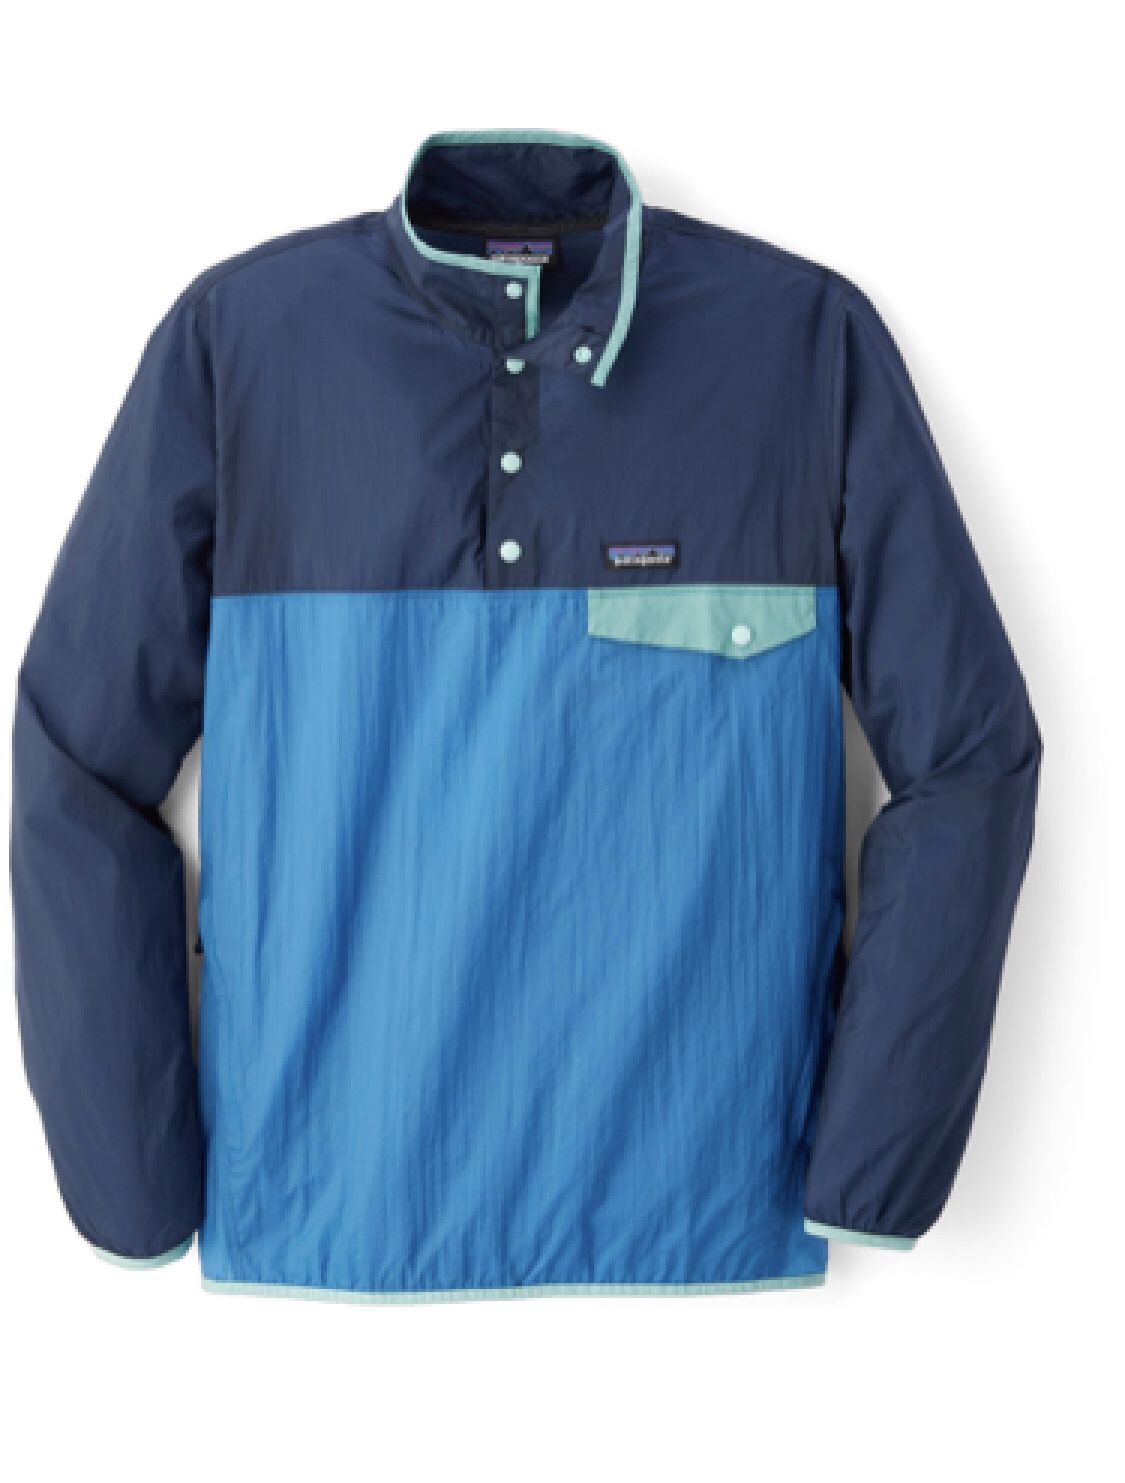 Patagonia Spring lightweight nylon pull over snap man’s jacket size medium